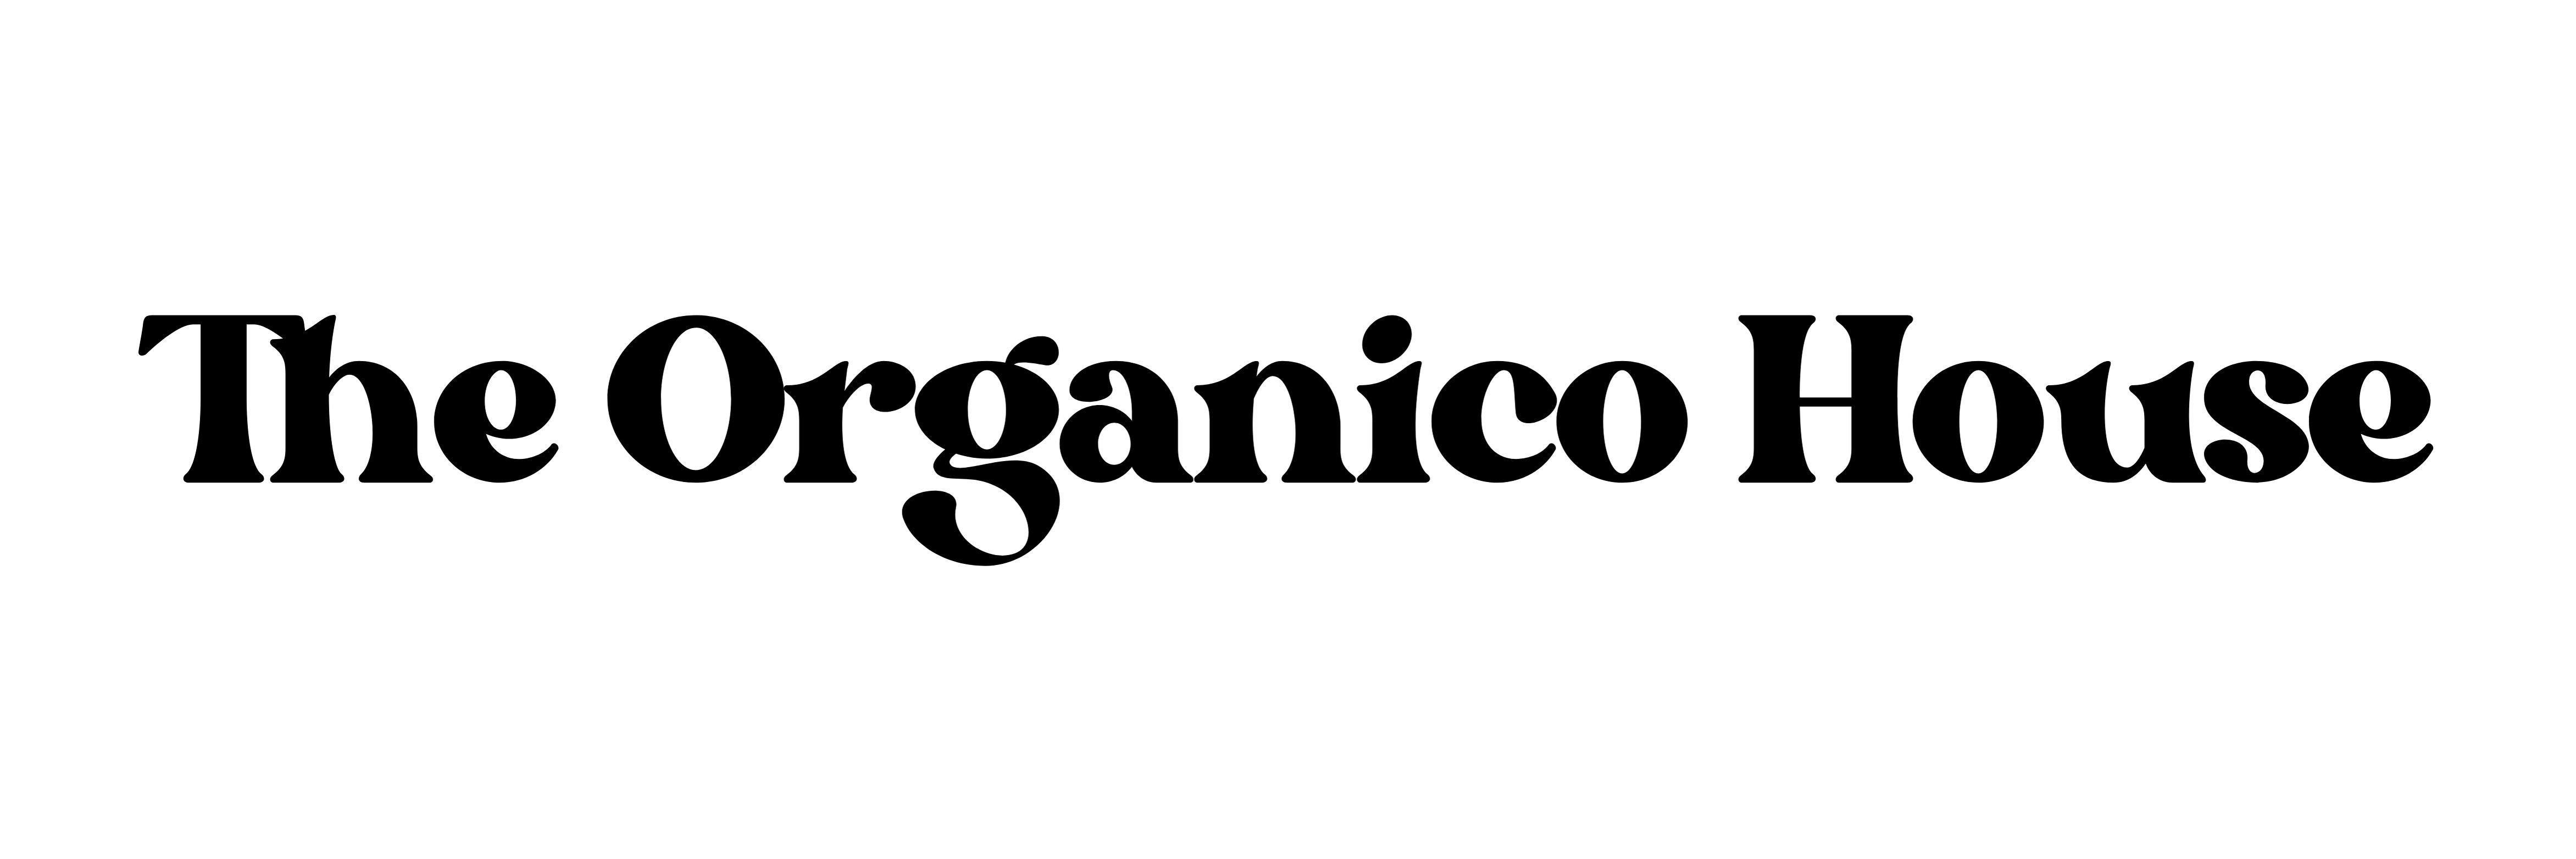 The Organico House